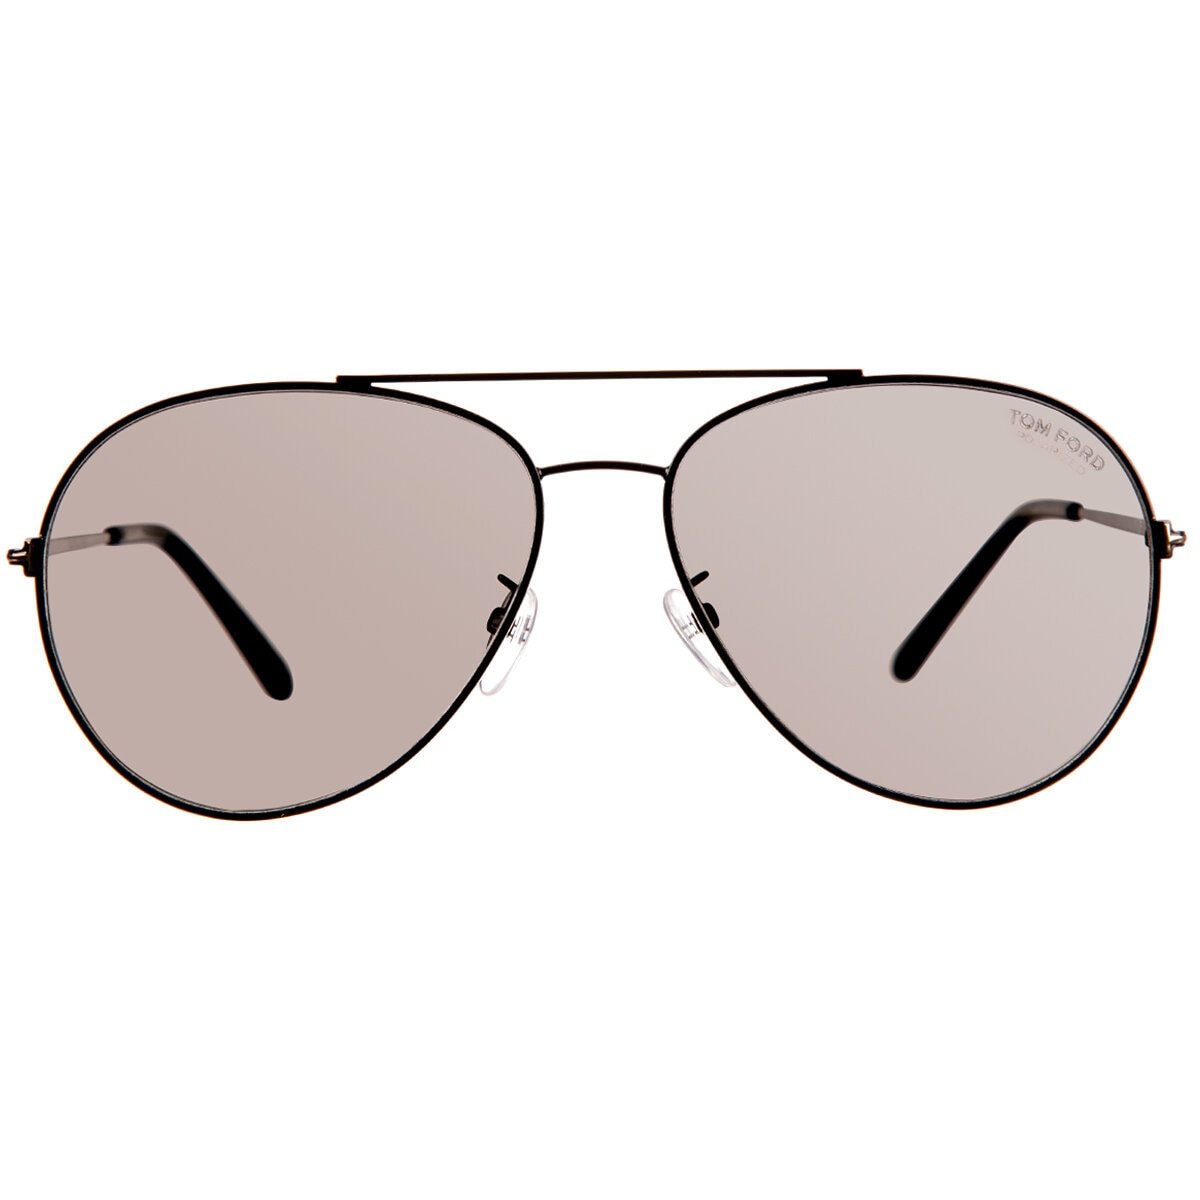 Introducir 31+ imagen tom ford glasses men’s costco